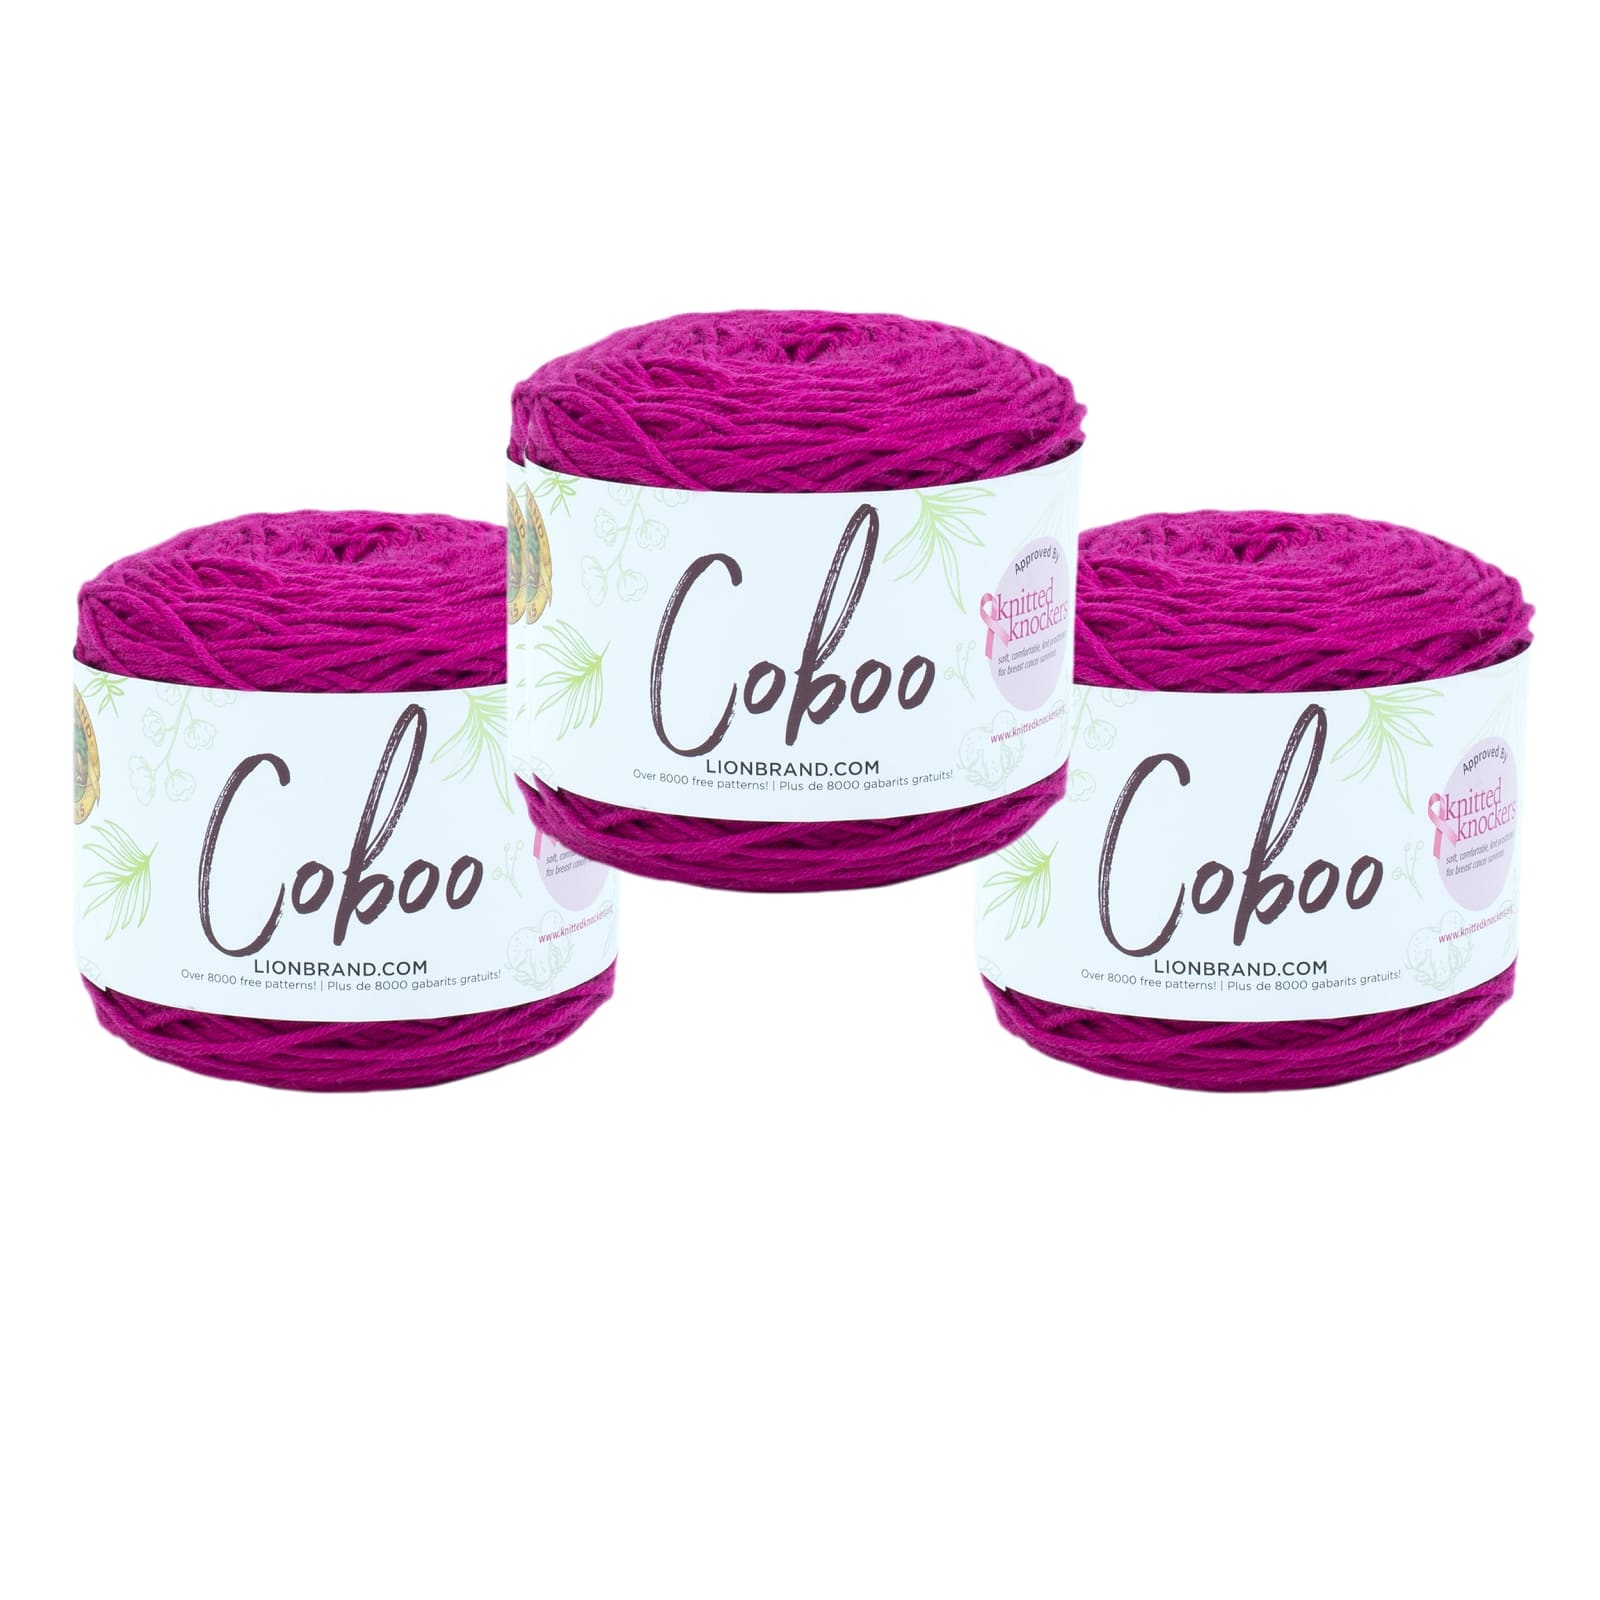 Lion Brand Yarn Coboo Magenta Light Pink Yarn 3 Pack, Coboo Yarn